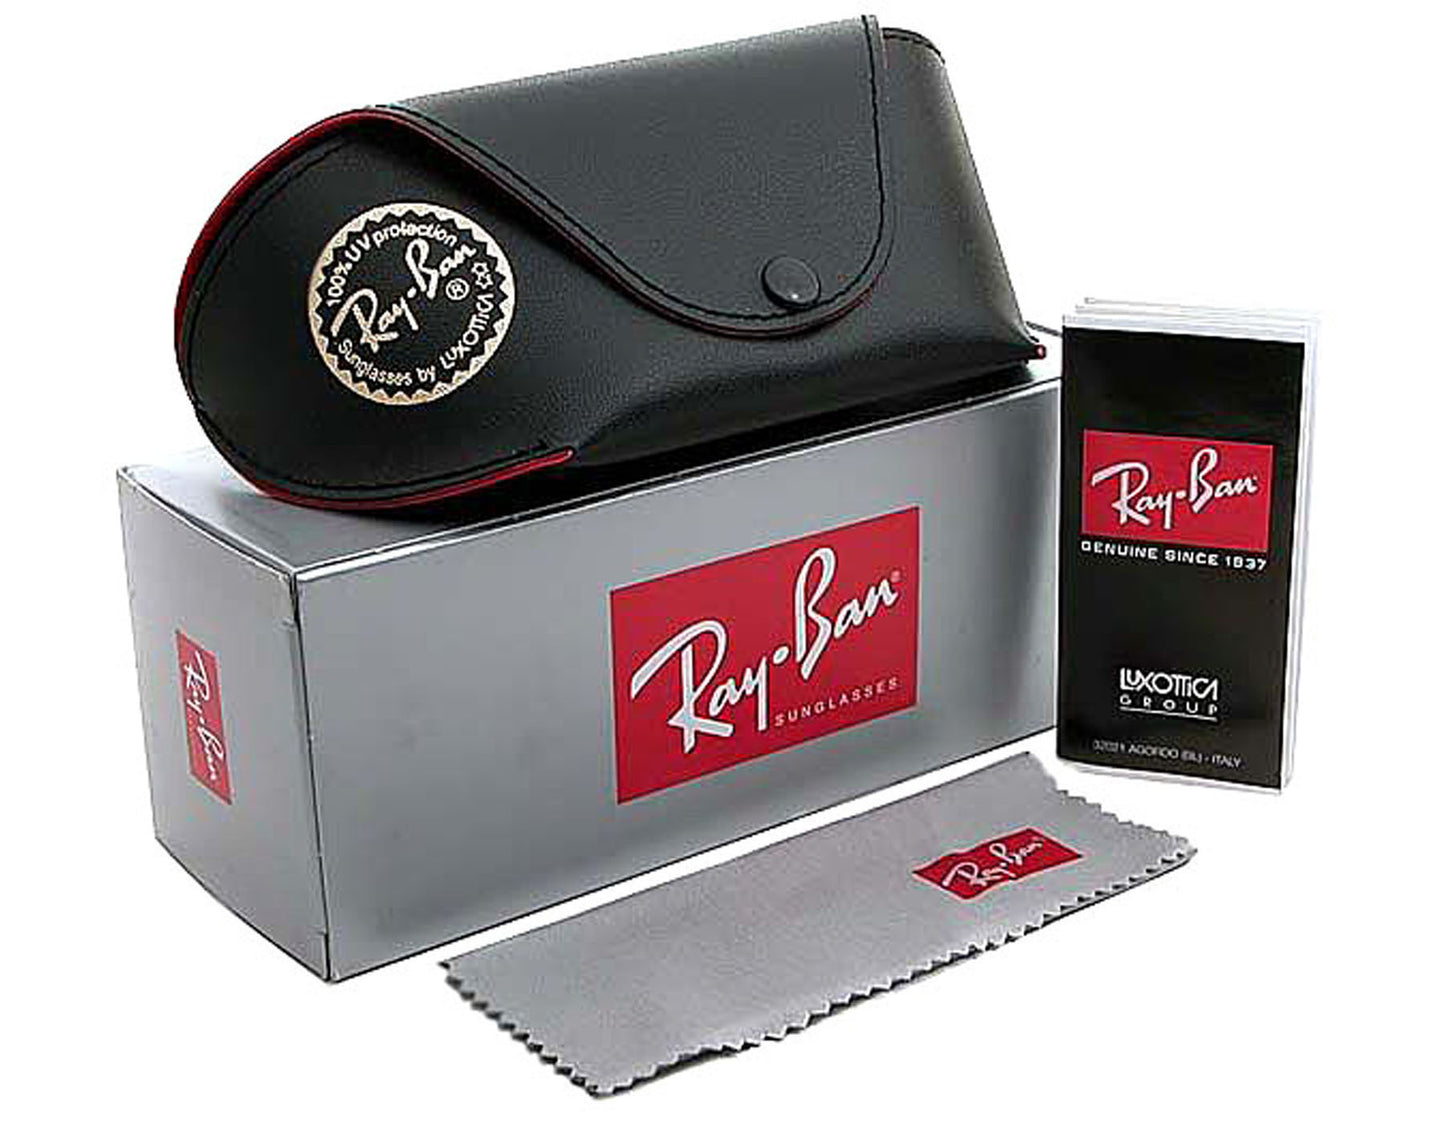 Ray Ban RB4387F-901-71-55  New Sunglasses